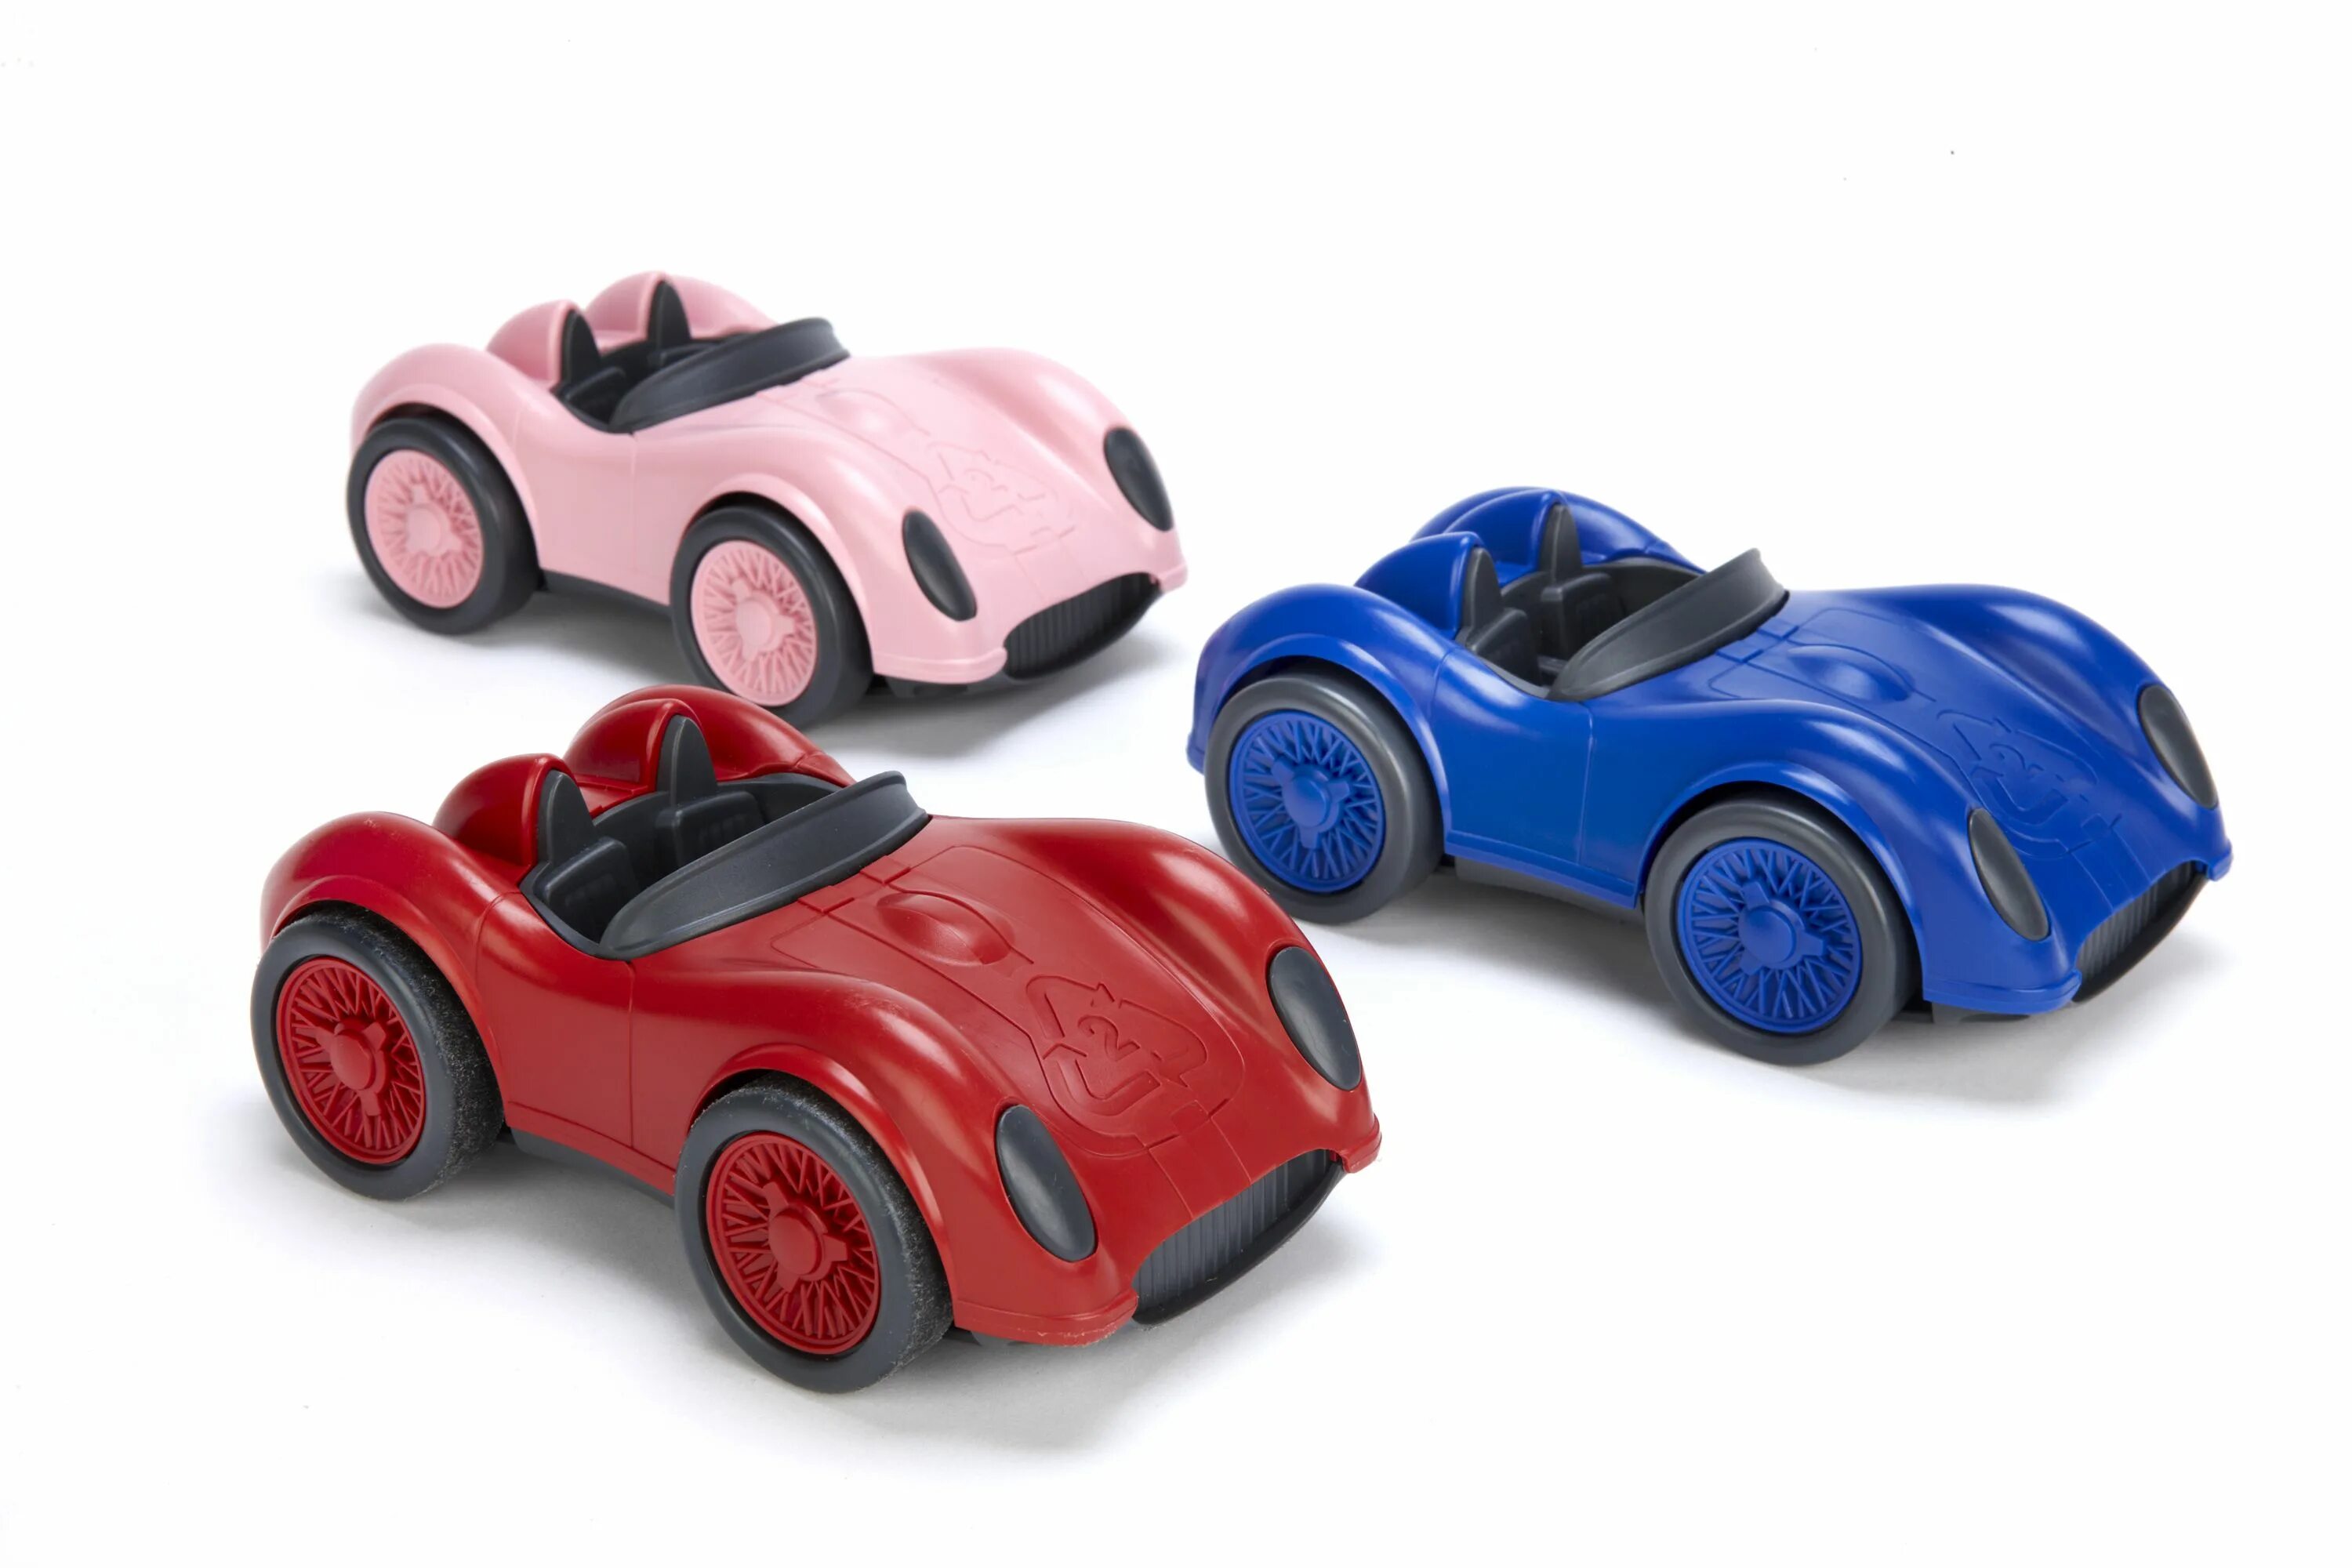 Toys toys машина. Машинки игрушки. Машина Toys игрушка. Популярные детские машинки. Игрушки Kids cars.